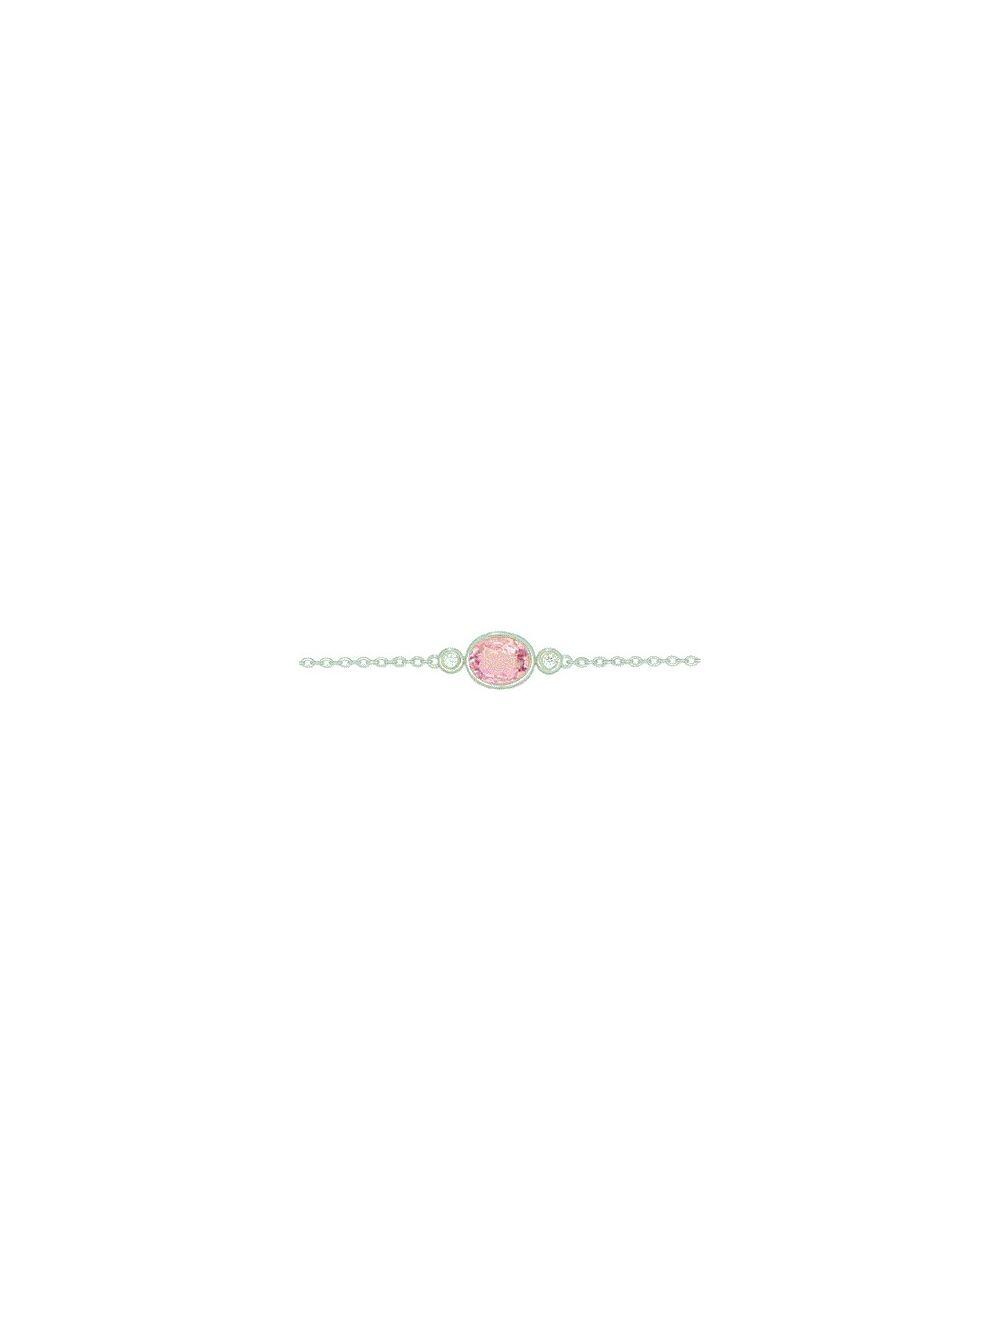 # Bracelet 18cm or blanc avec 0.50ct saphir rose et 0.02ct diamants naturels